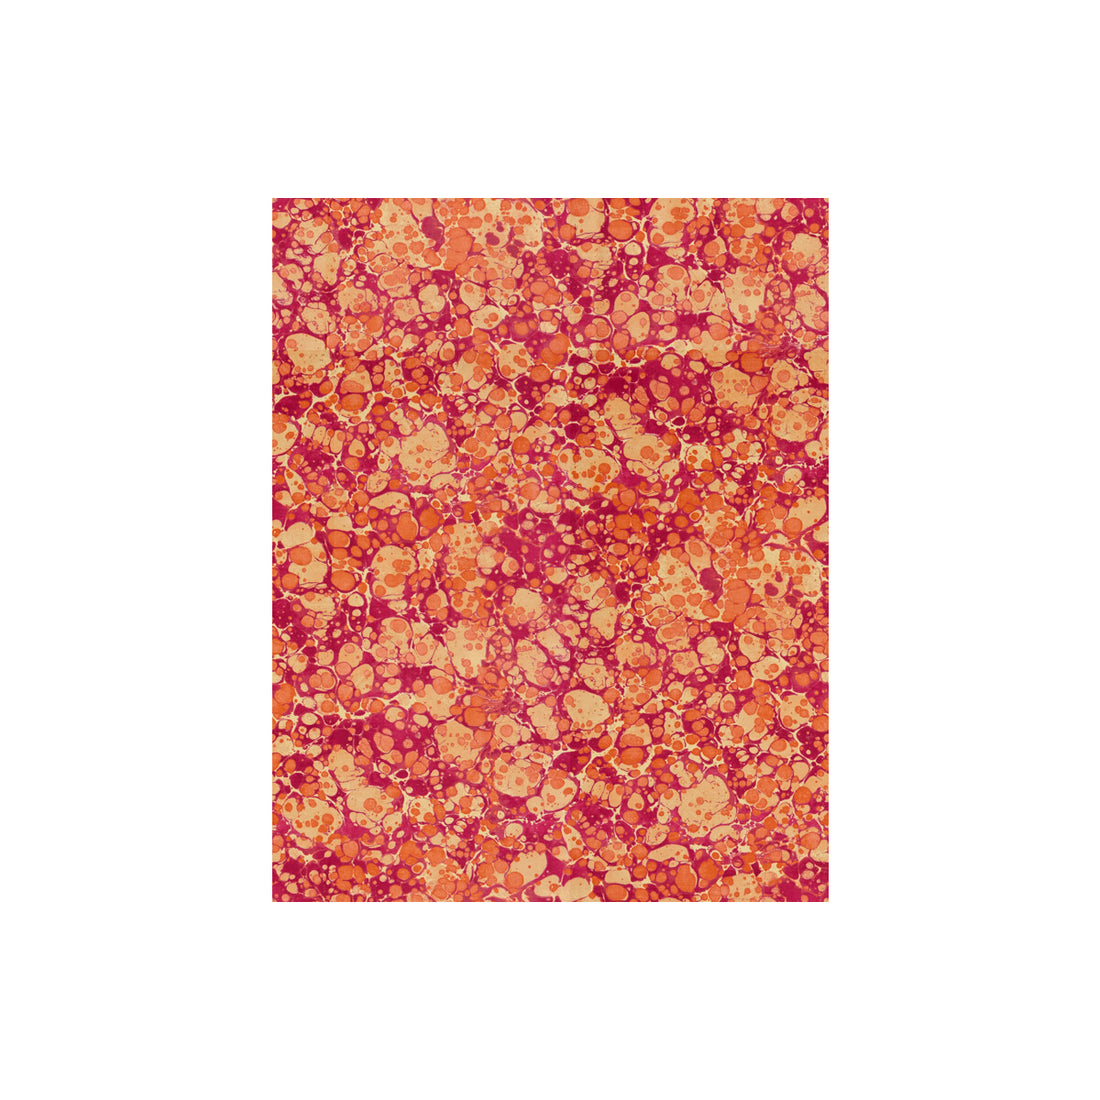 Velino fabric in fuchsia color - pattern VELINO.716.0 - by Kravet Basics in the Jonathan Adler Charade collection